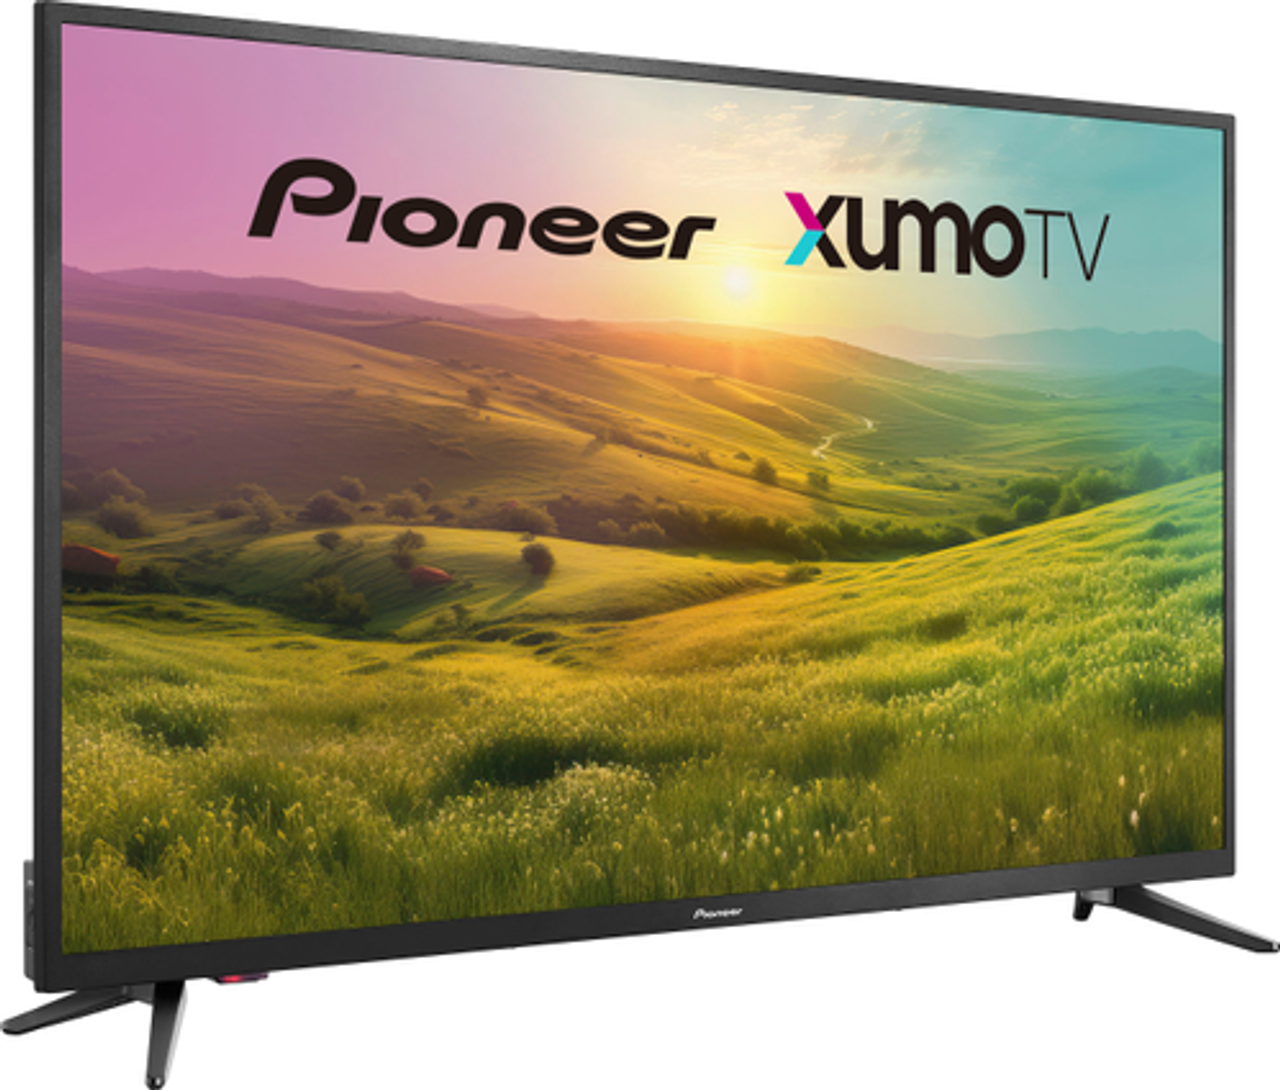 Pioneer - 43" Class LED 4K UHD Smart Xumo TV